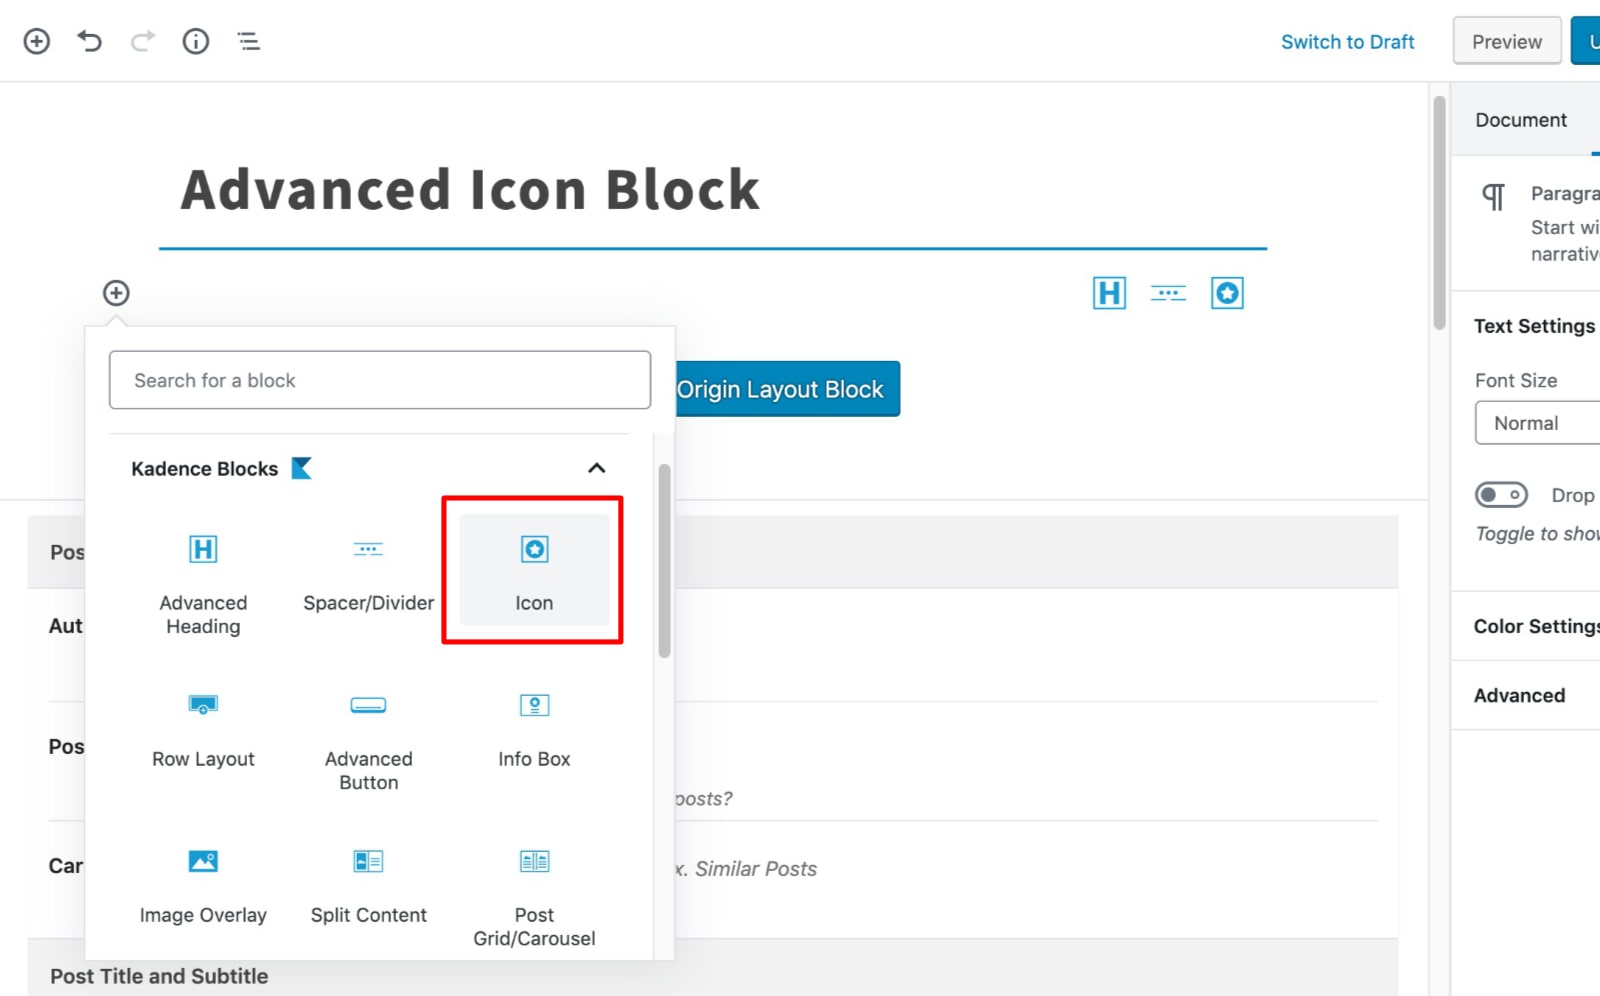 Select Icon Block